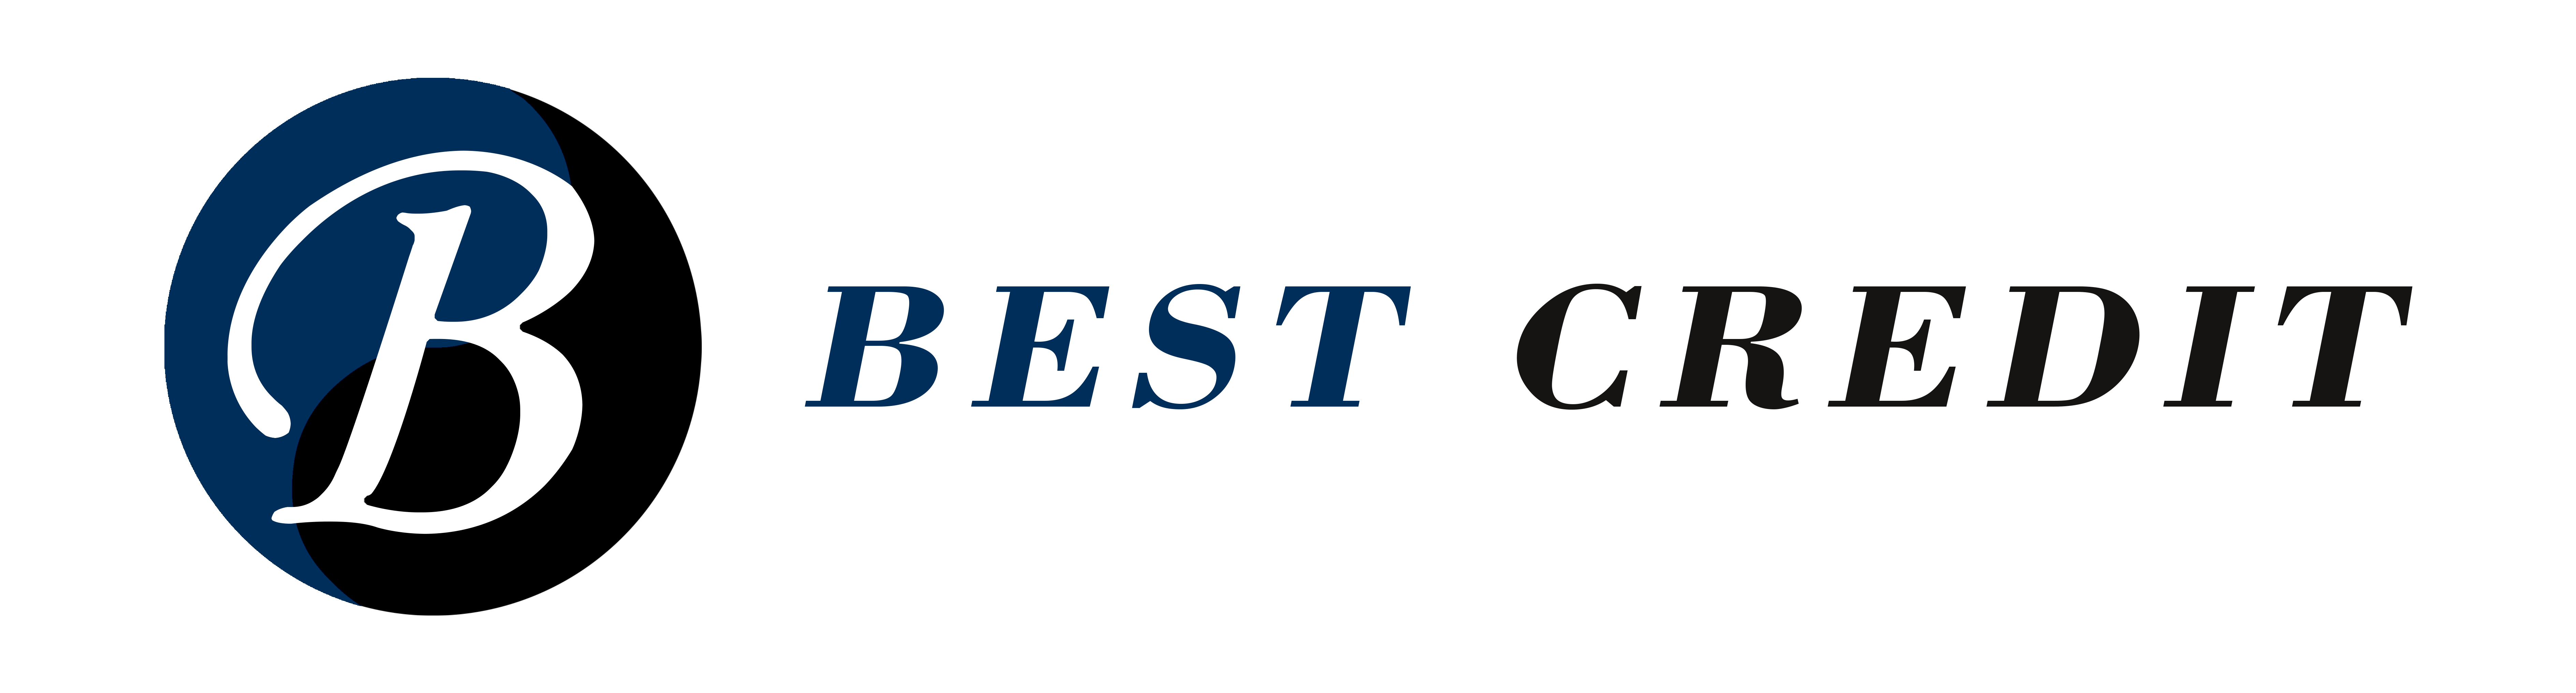 Logo bestcredit.ro